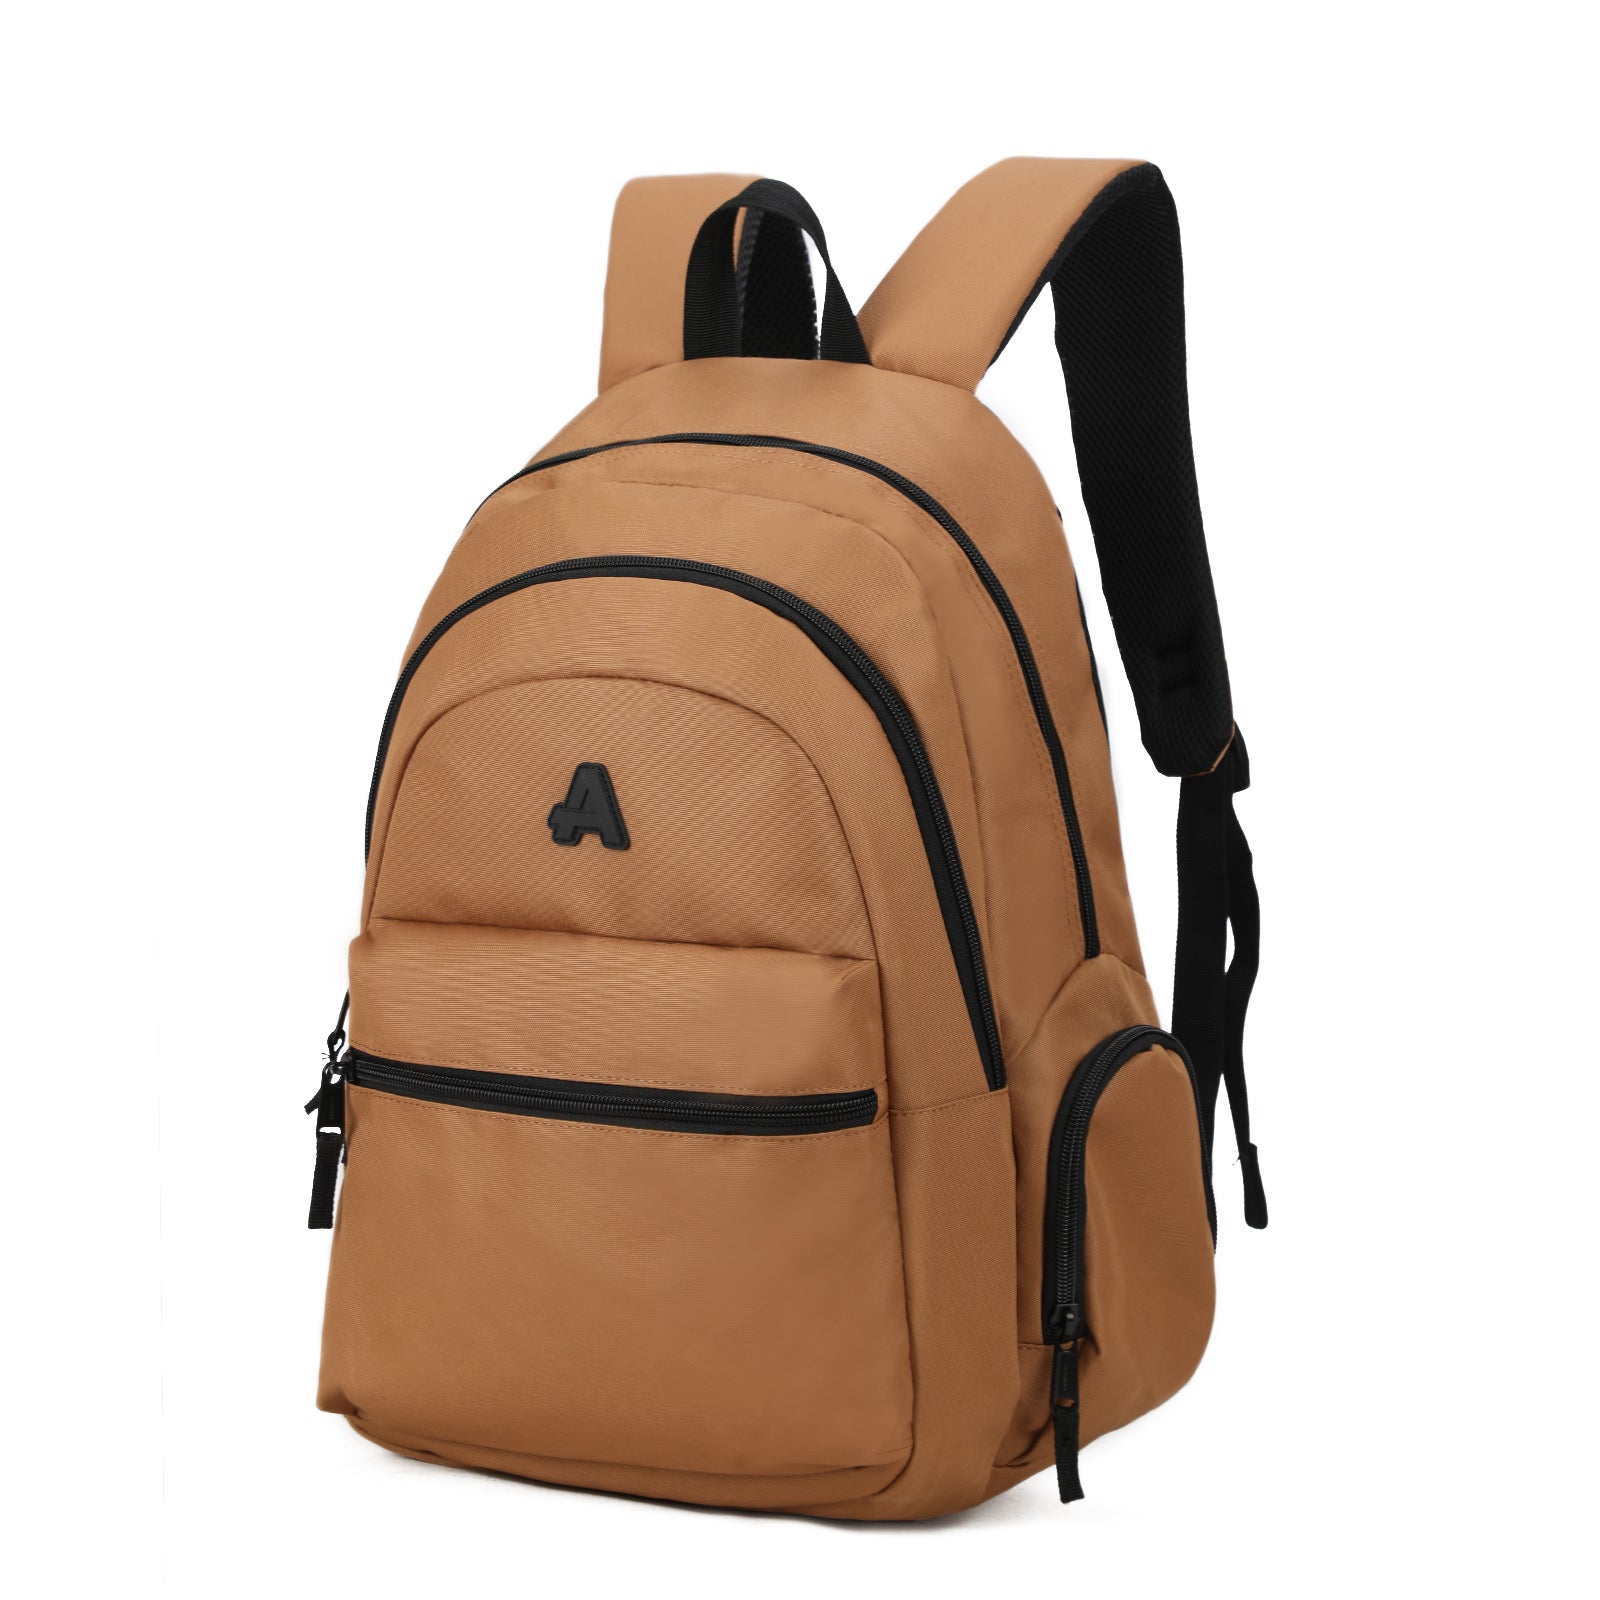 Aoking Travel Backpack XN2619 Brown